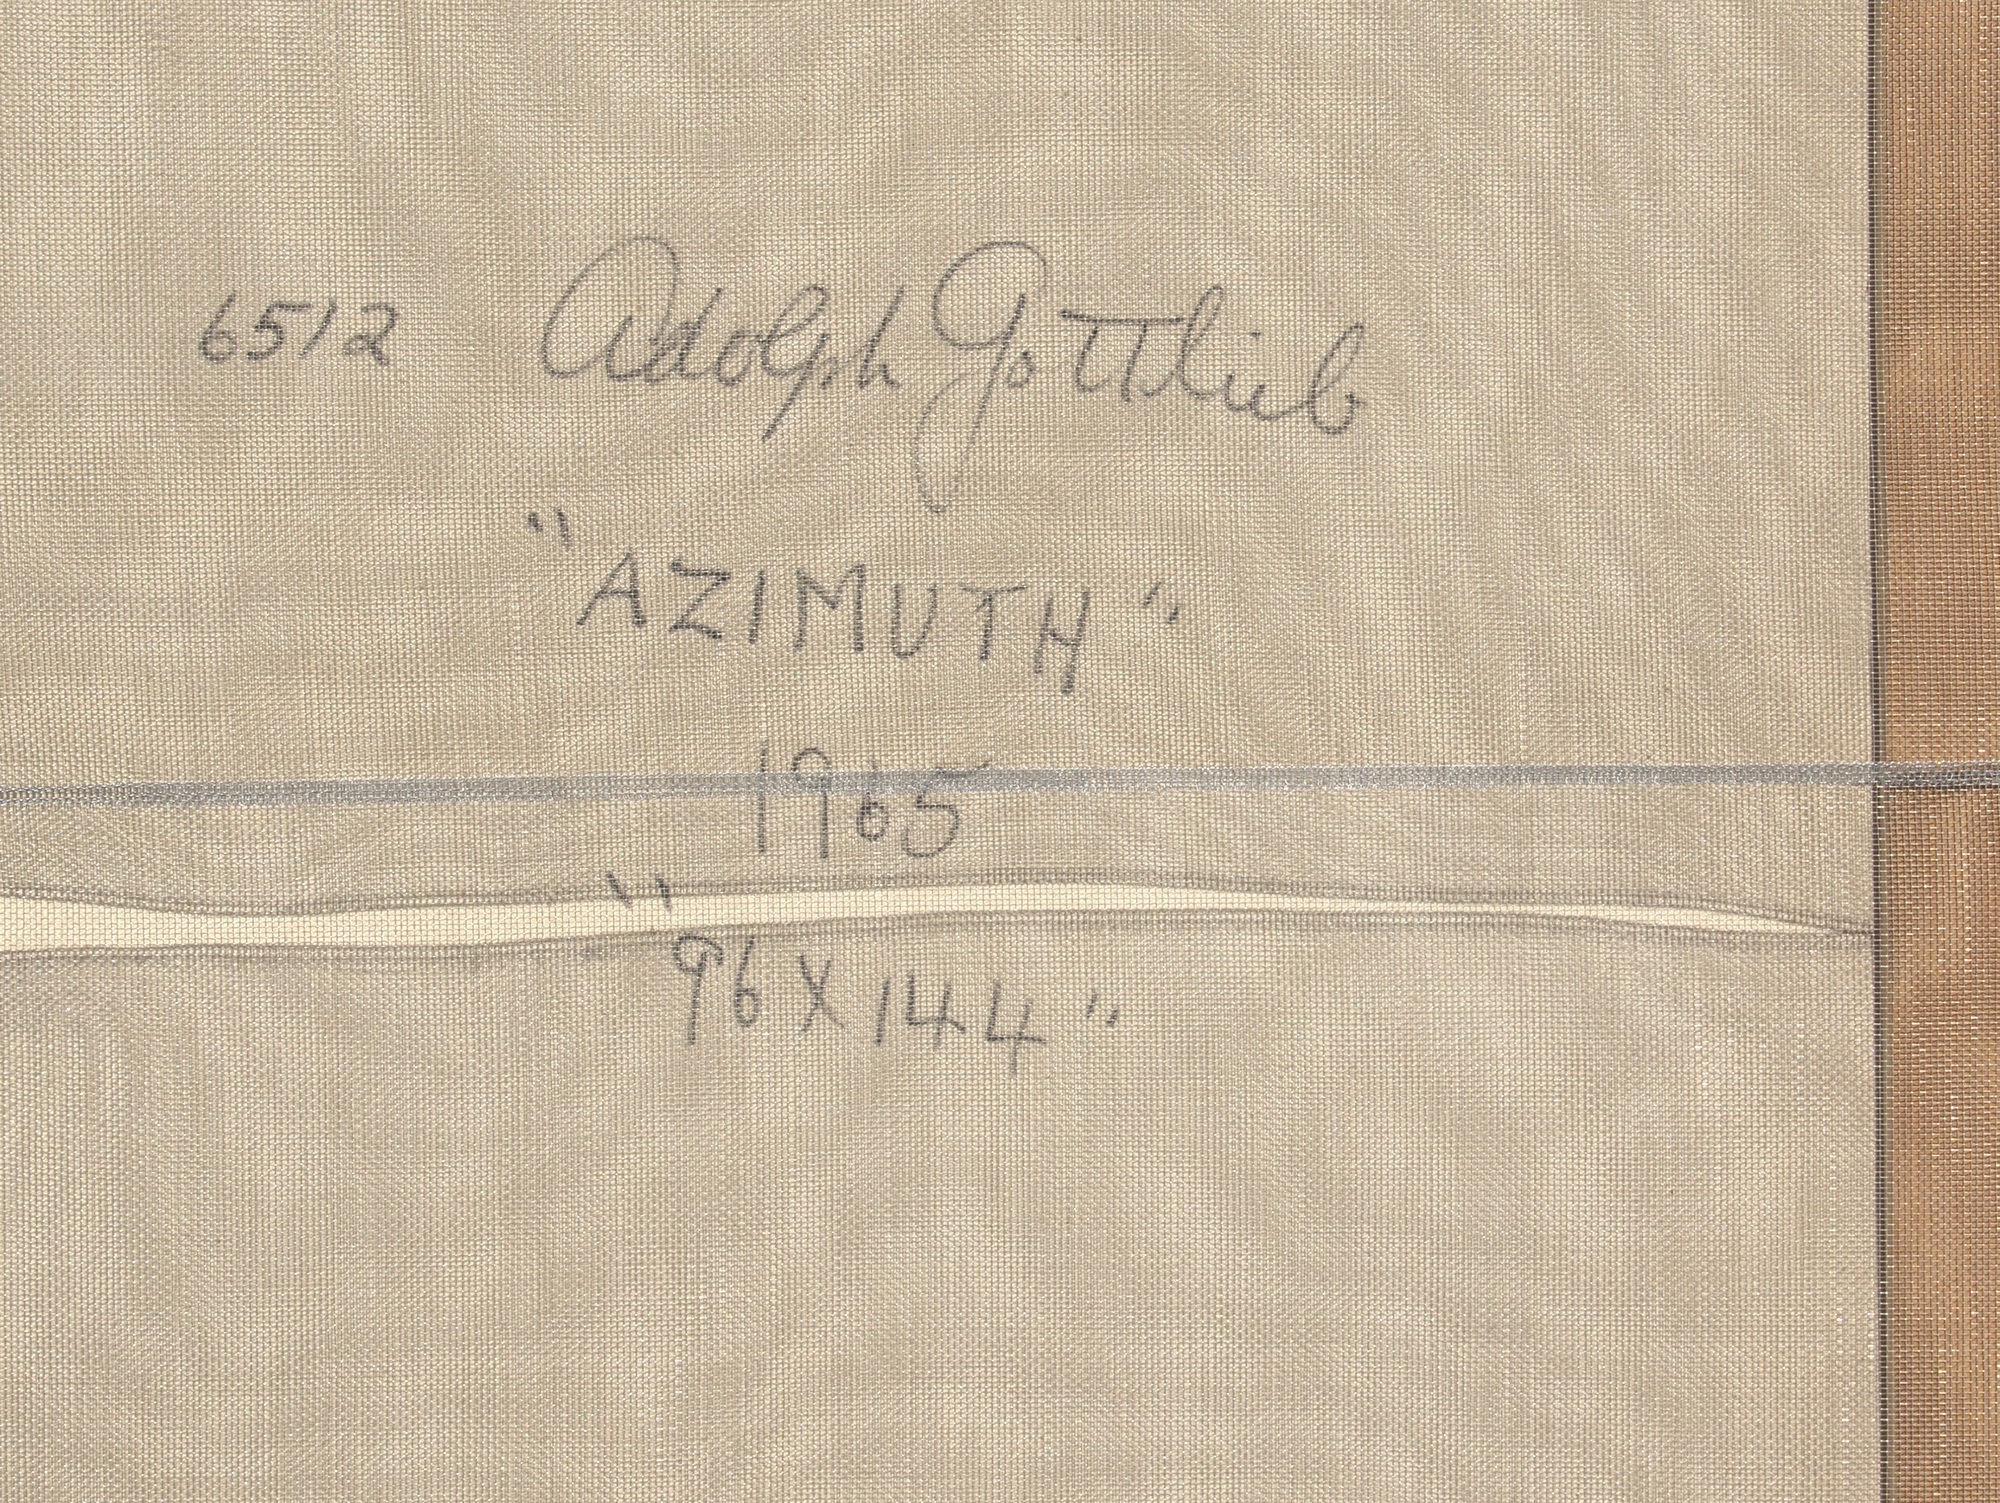 ADOLPH GOTTLIEB - Azimuth - oil on canvas - 95 3/4 x 144 1/4 in.